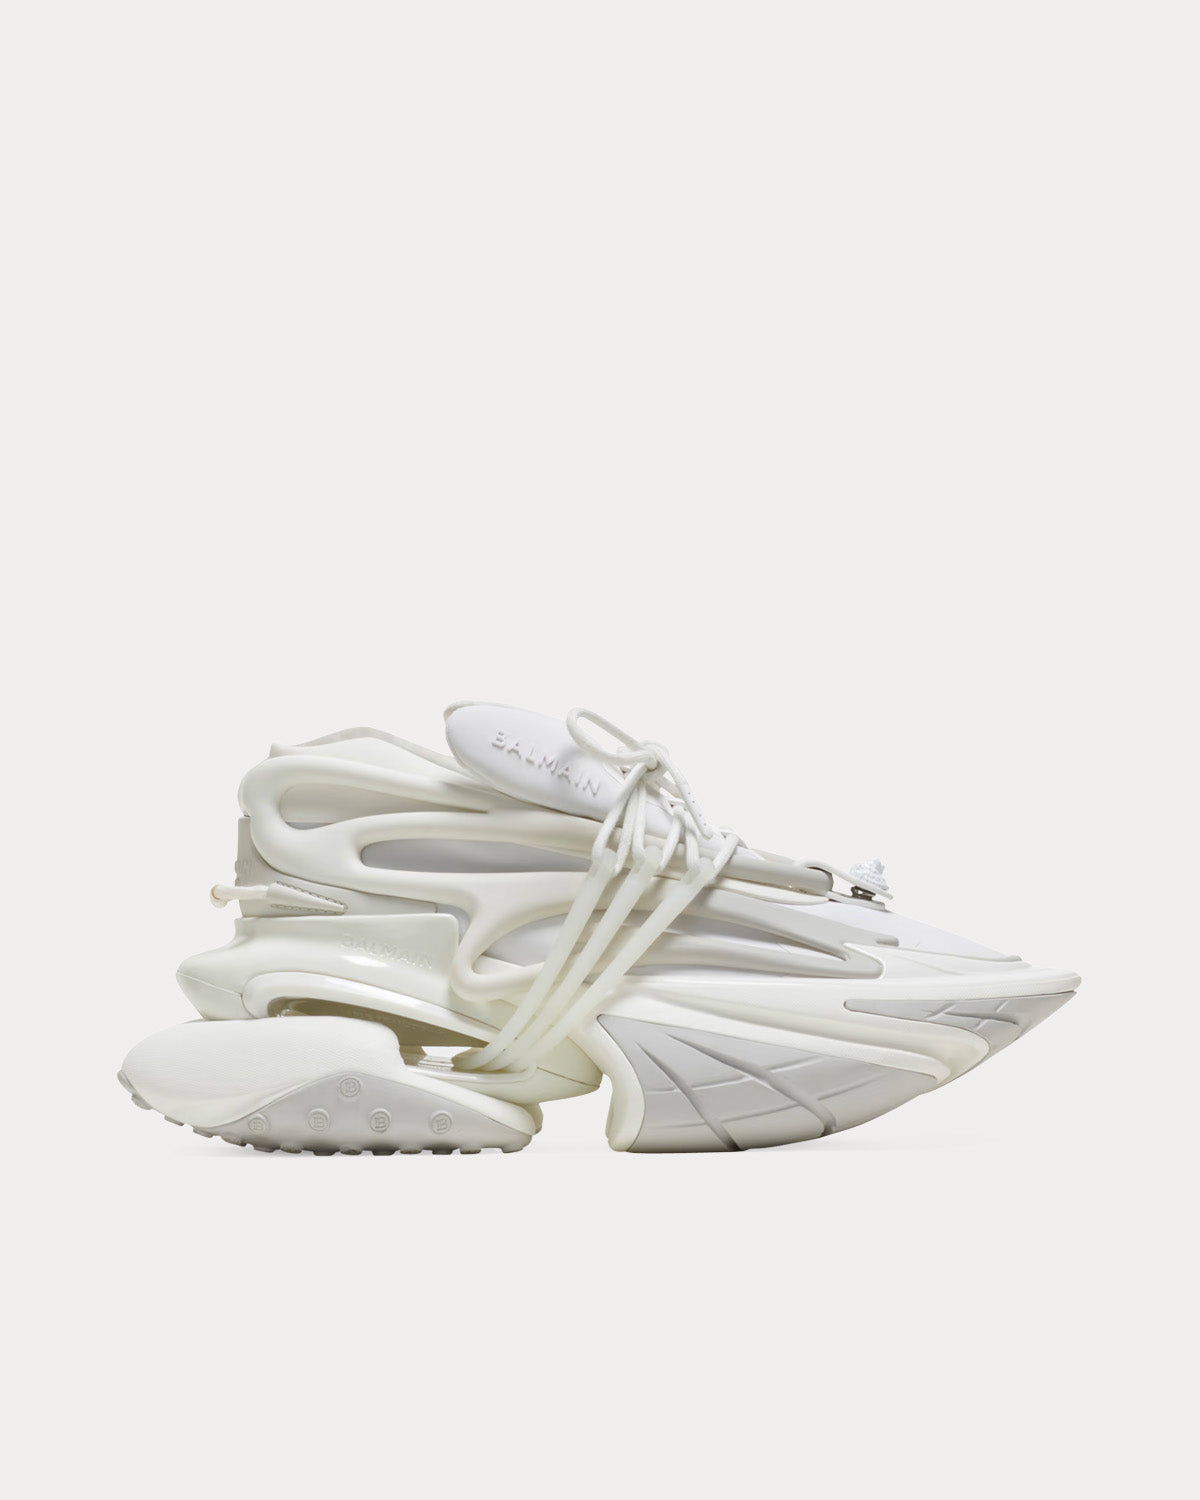 Balmain - Unicorn Neoprene & Leather White Low Top Sneakers